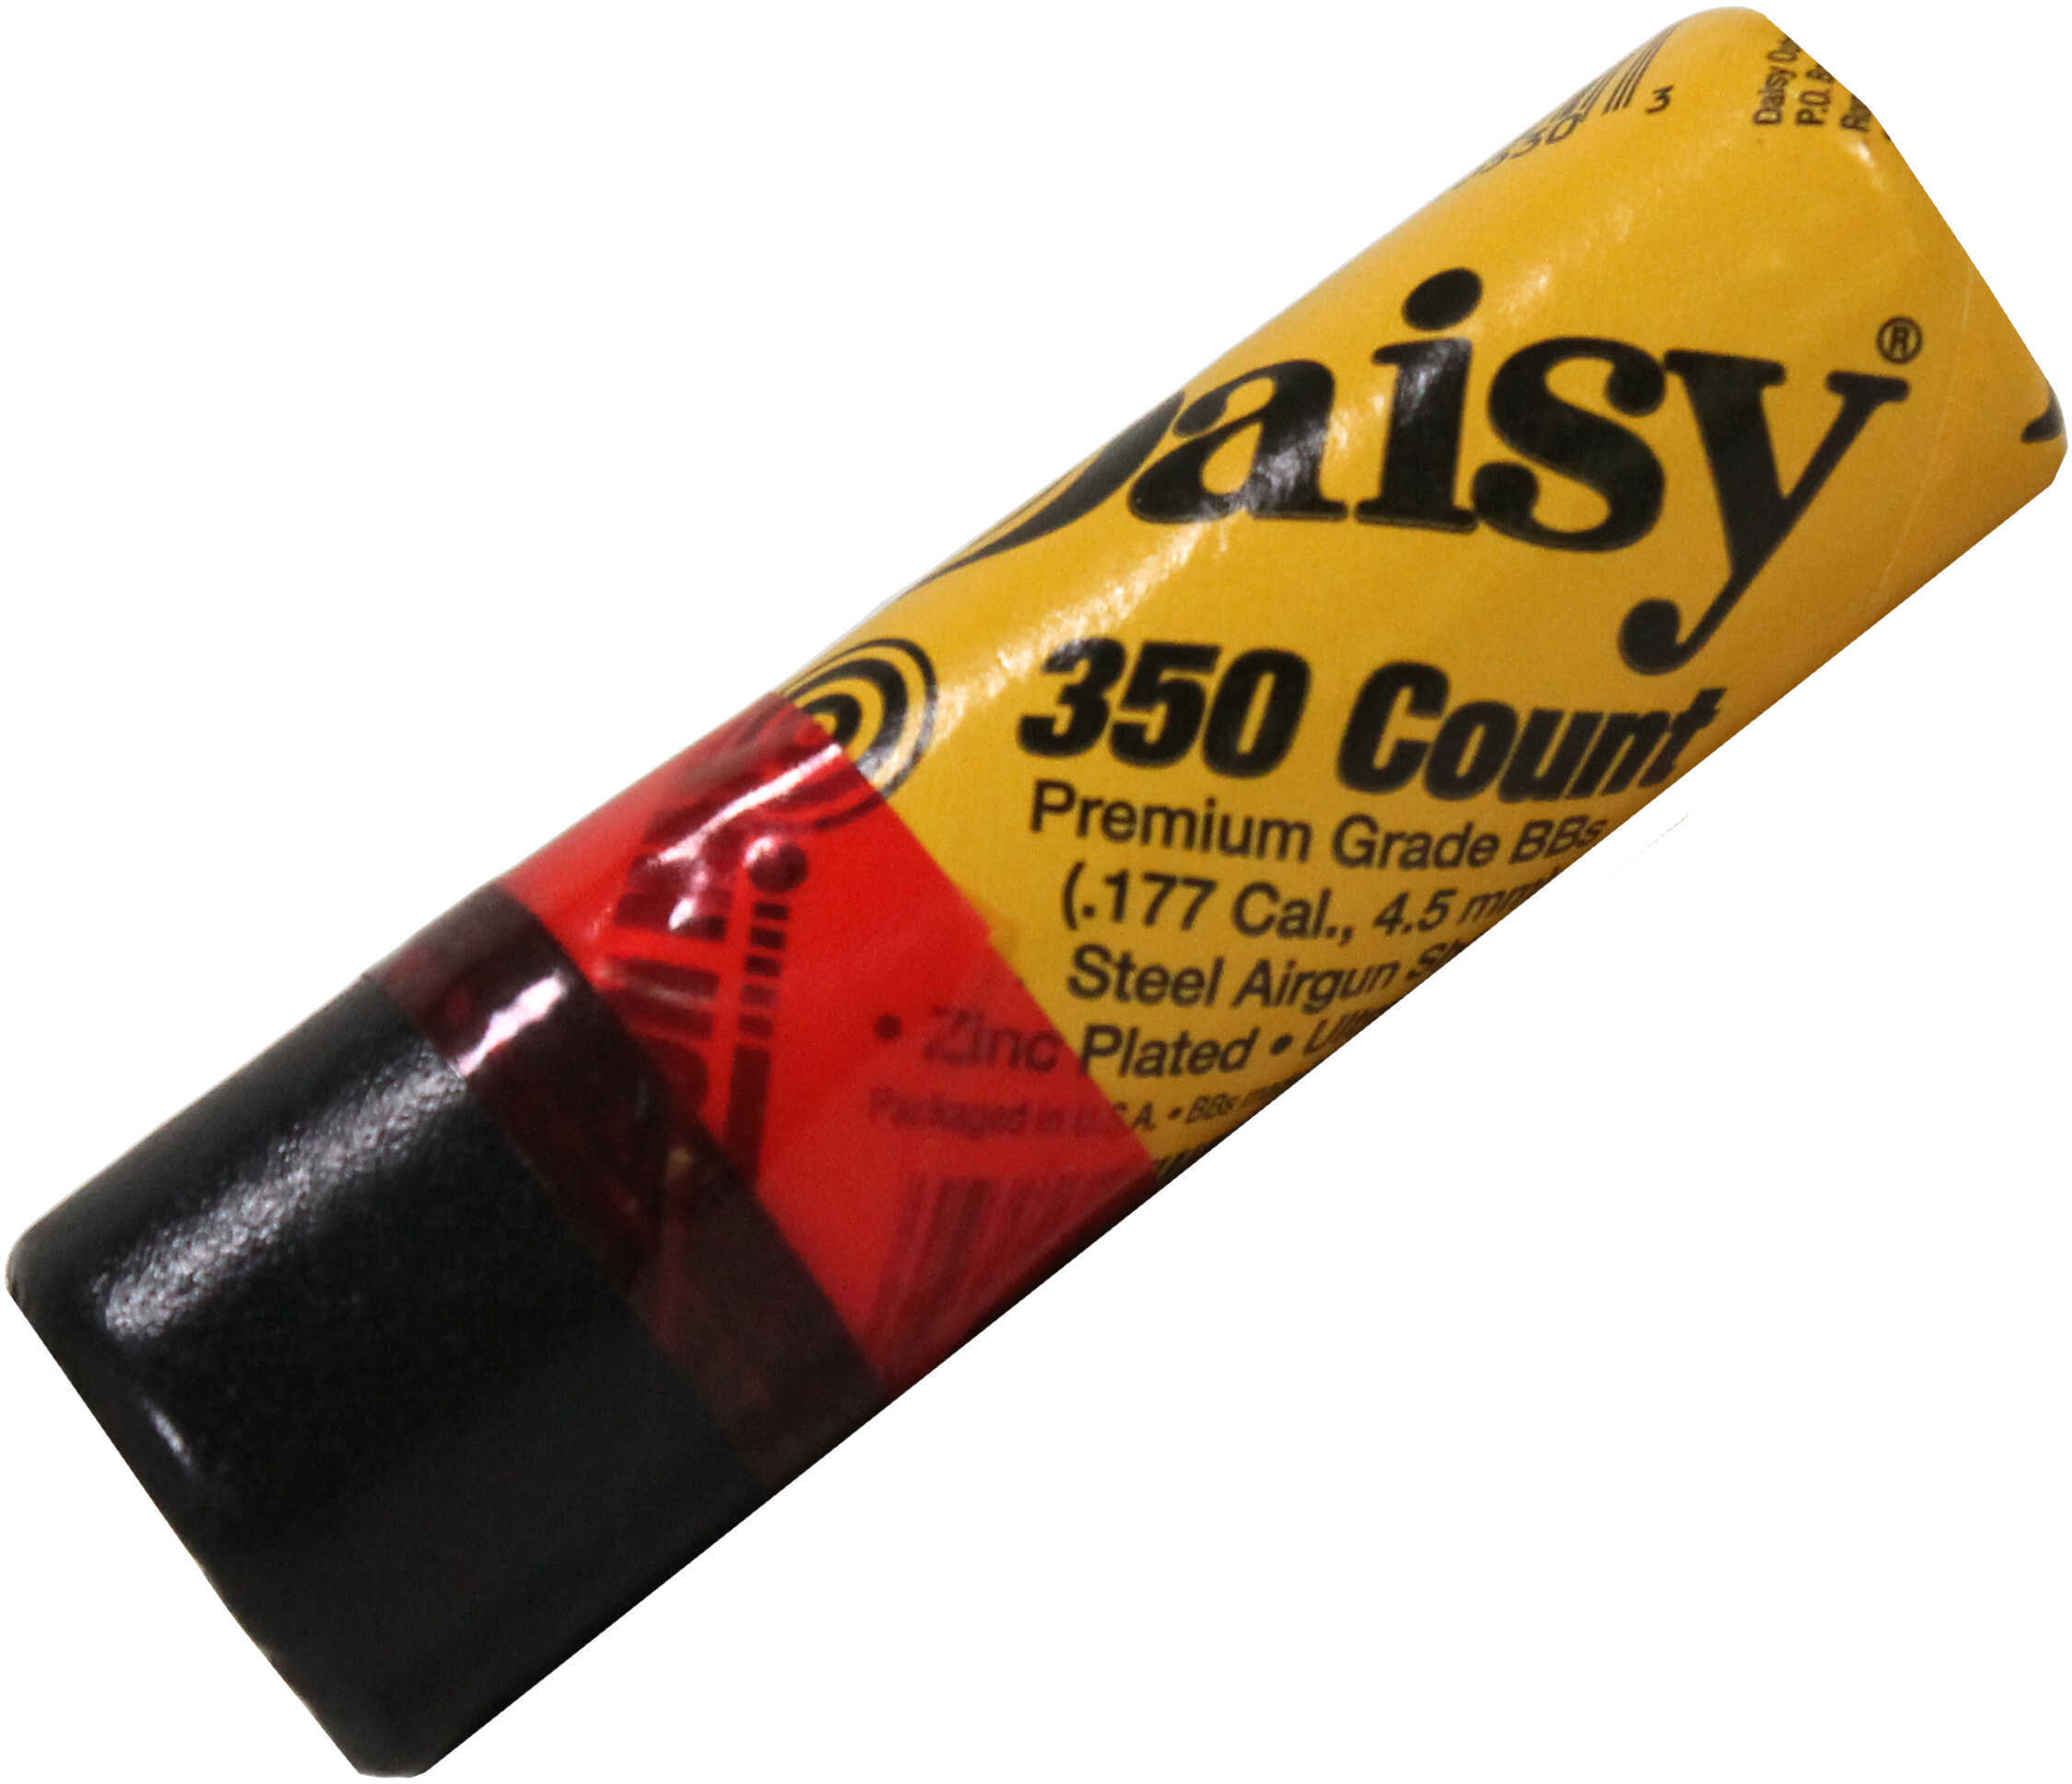 Daisy Easy Loading Tube Contains 350 Bbs Md: 530